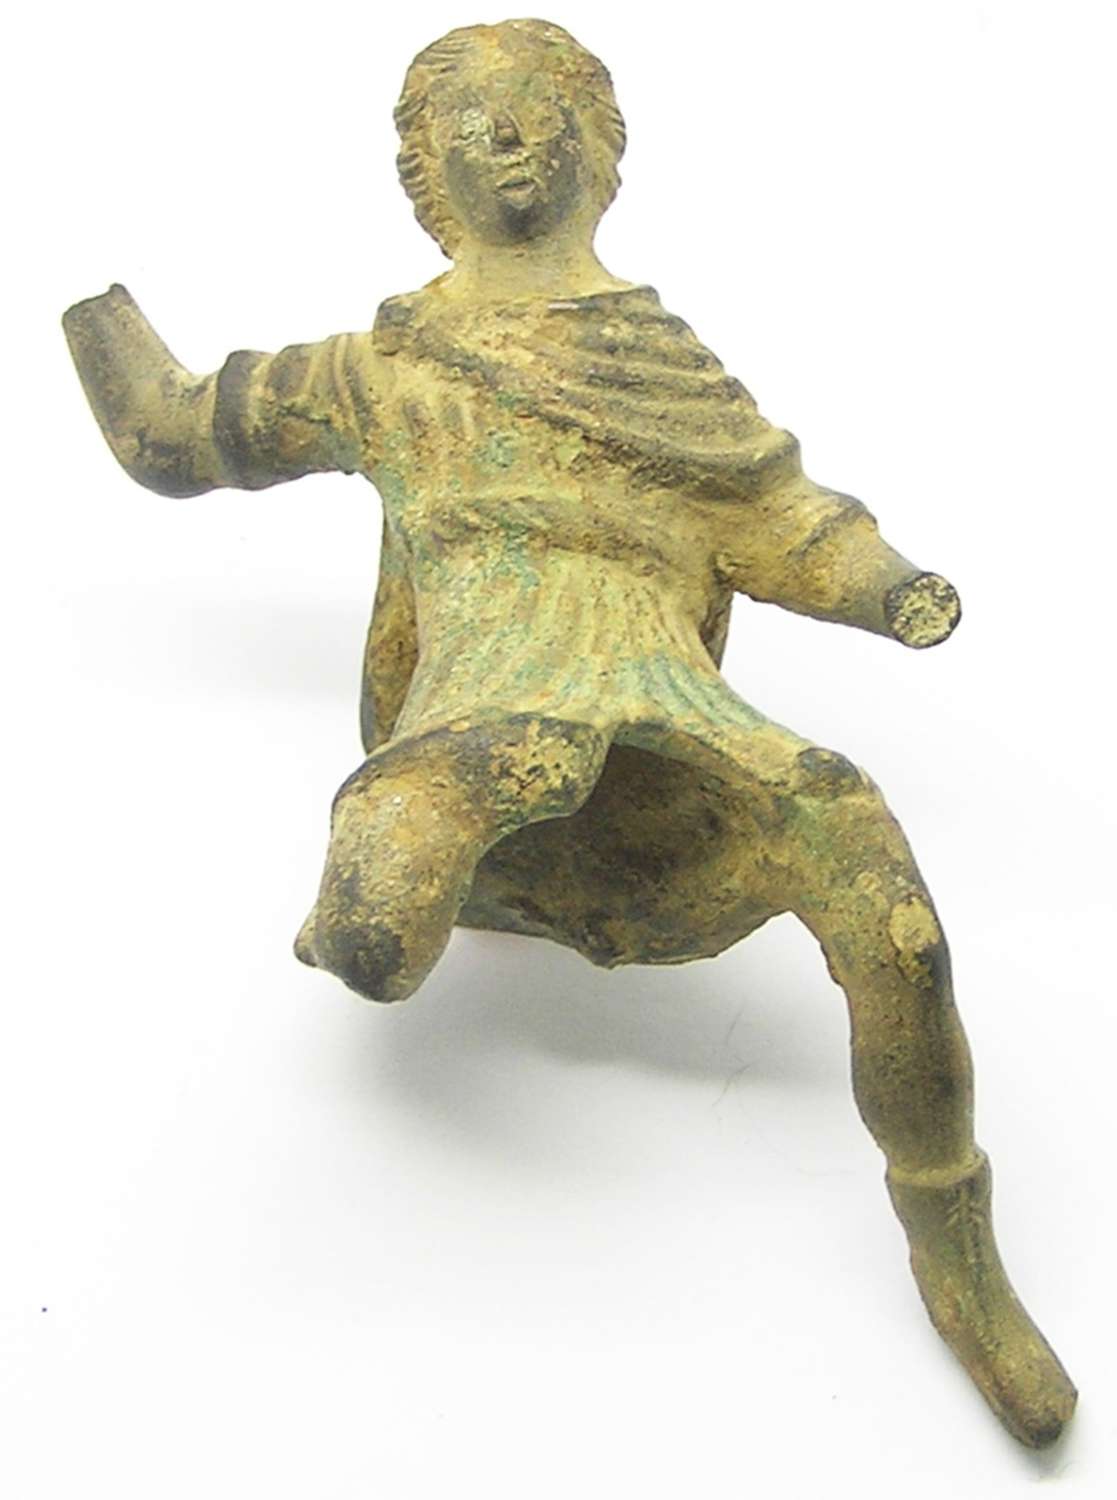 Ancient Roman or Greek Thracian horseman figurine